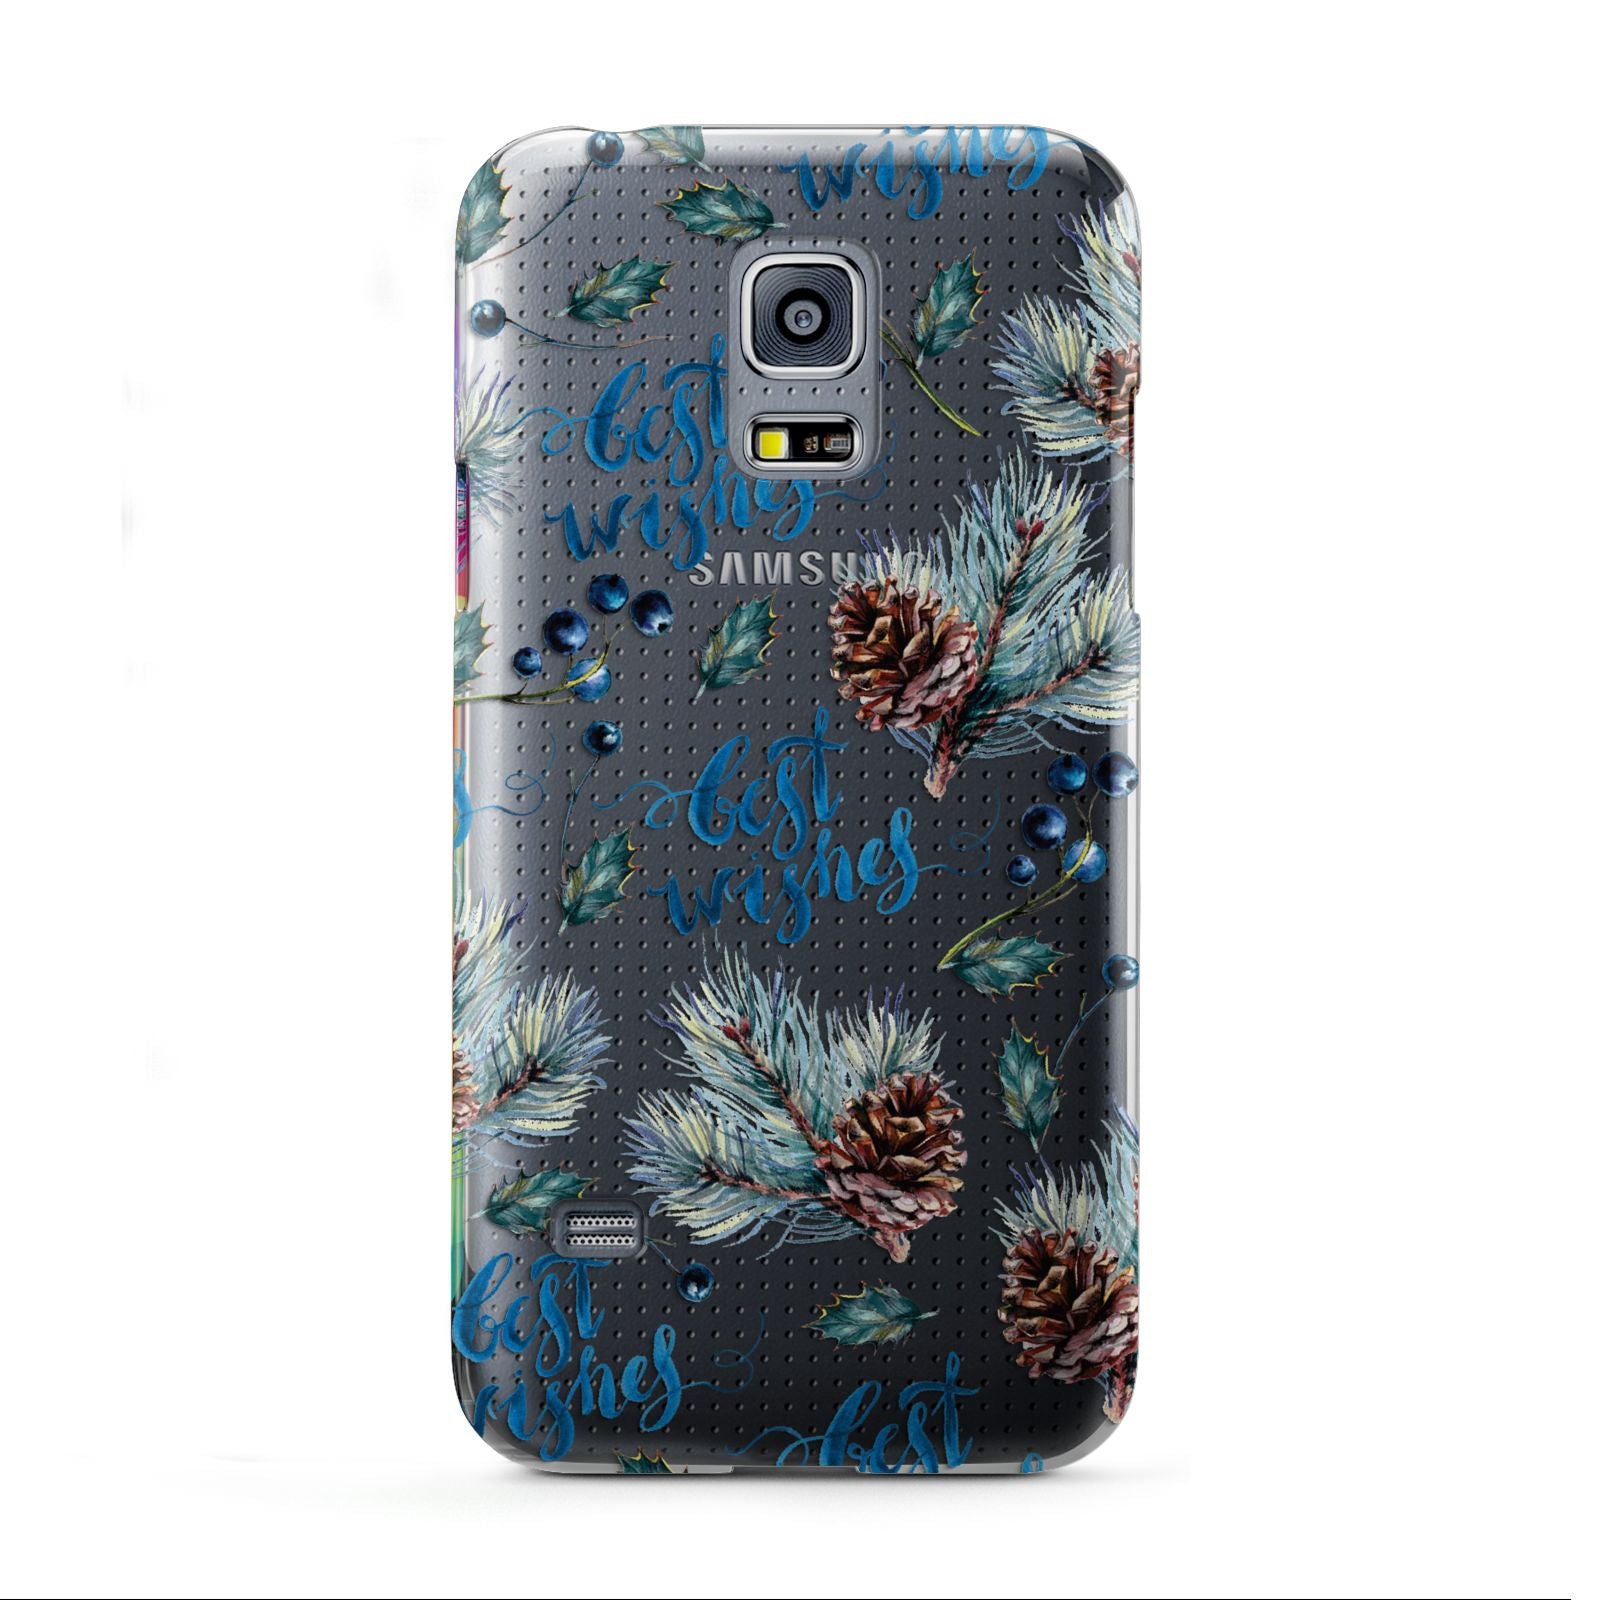 Pine cones wild berries Samsung Galaxy S5 Mini Case